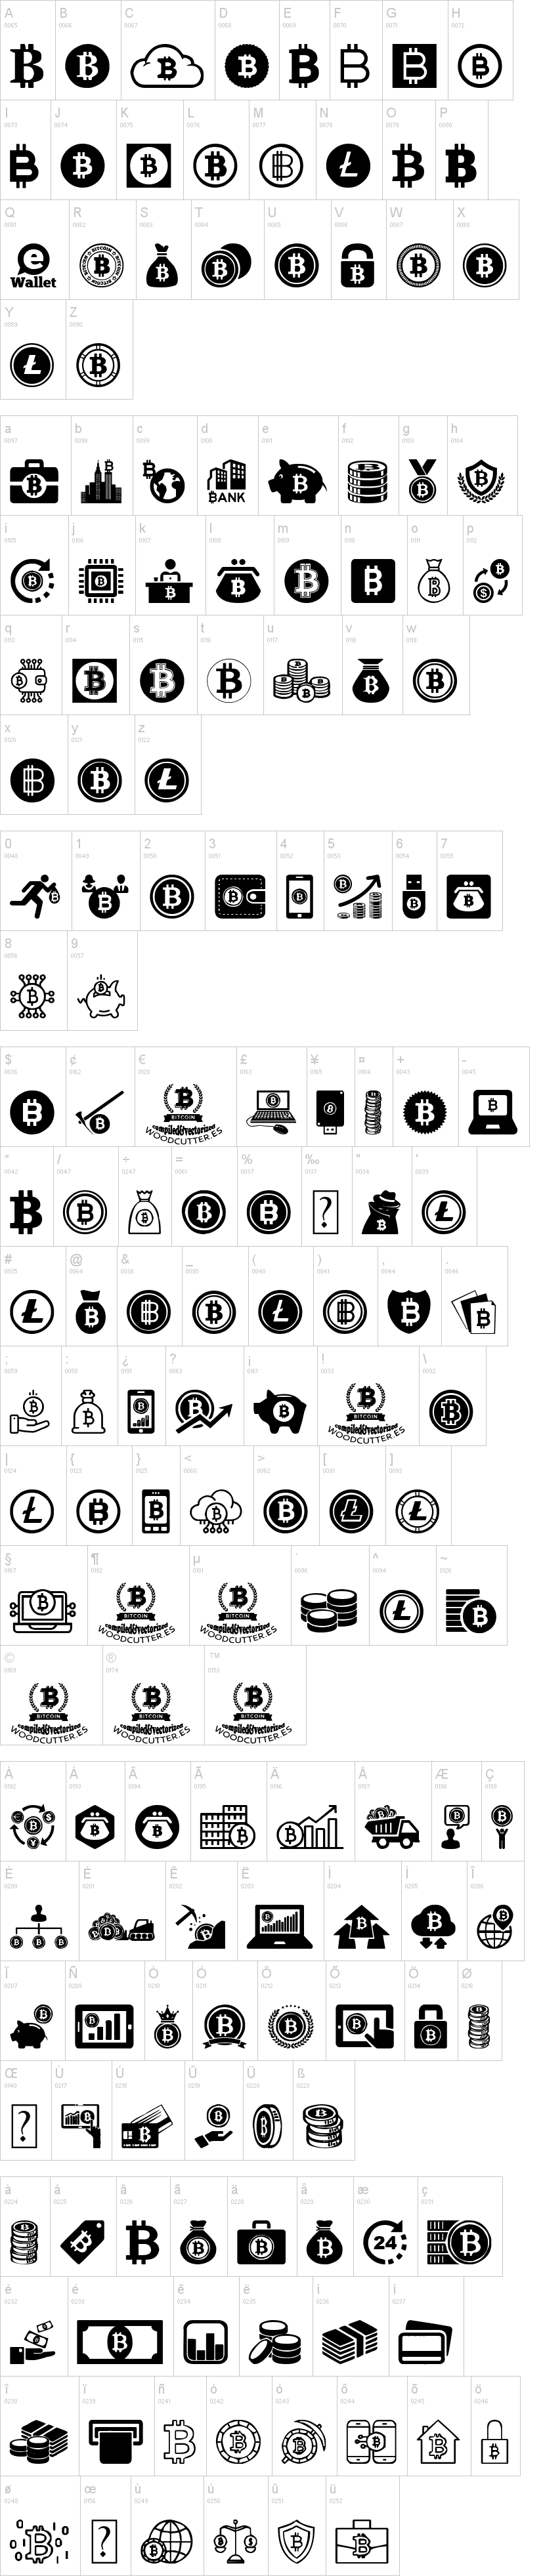 bitcoin logo betűtípus